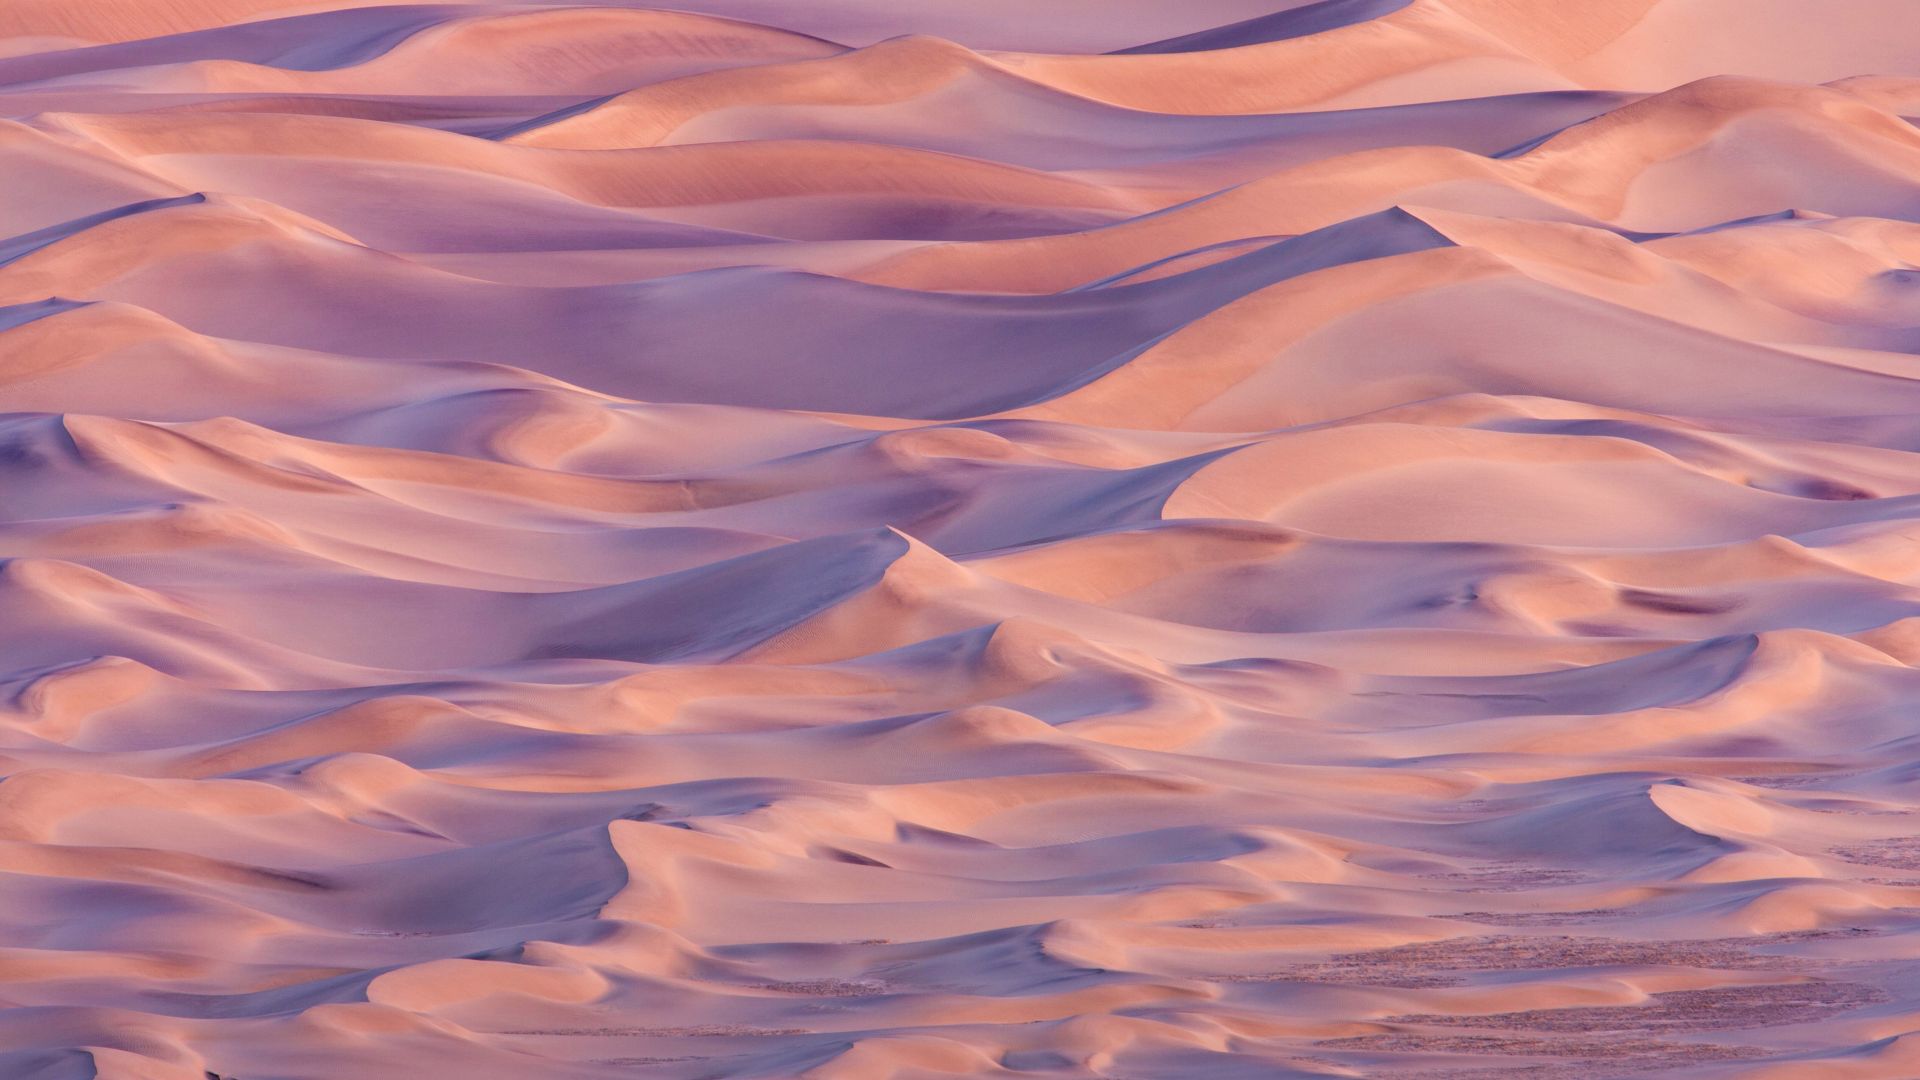 Wallpaper Death valley desert dunes